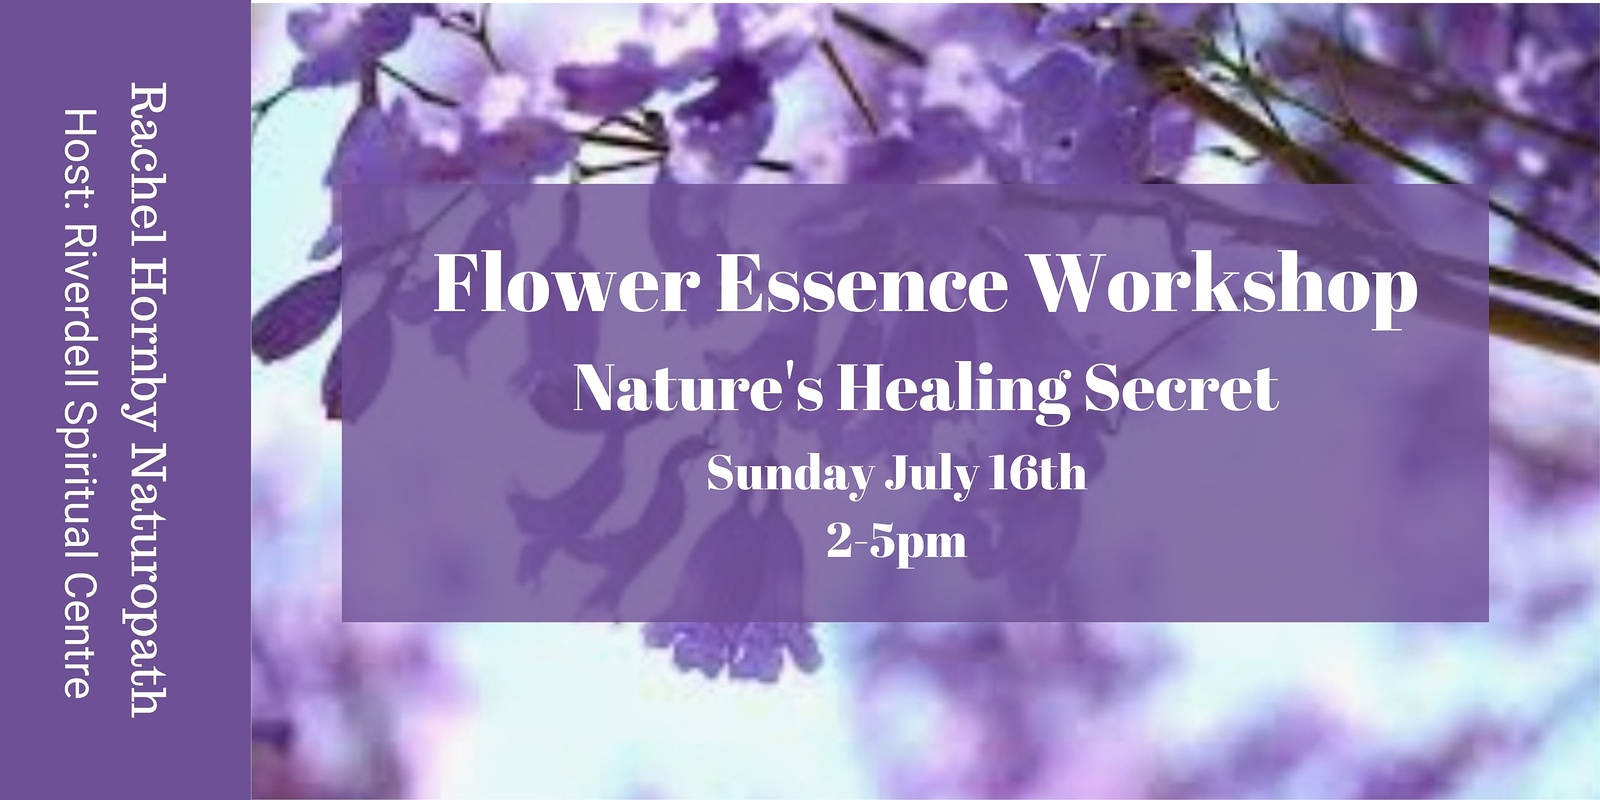 Natures Healing Secret - Flowek Essence Workshops - 16th July 2-5pm Riverdell Spiritual Centre. SA